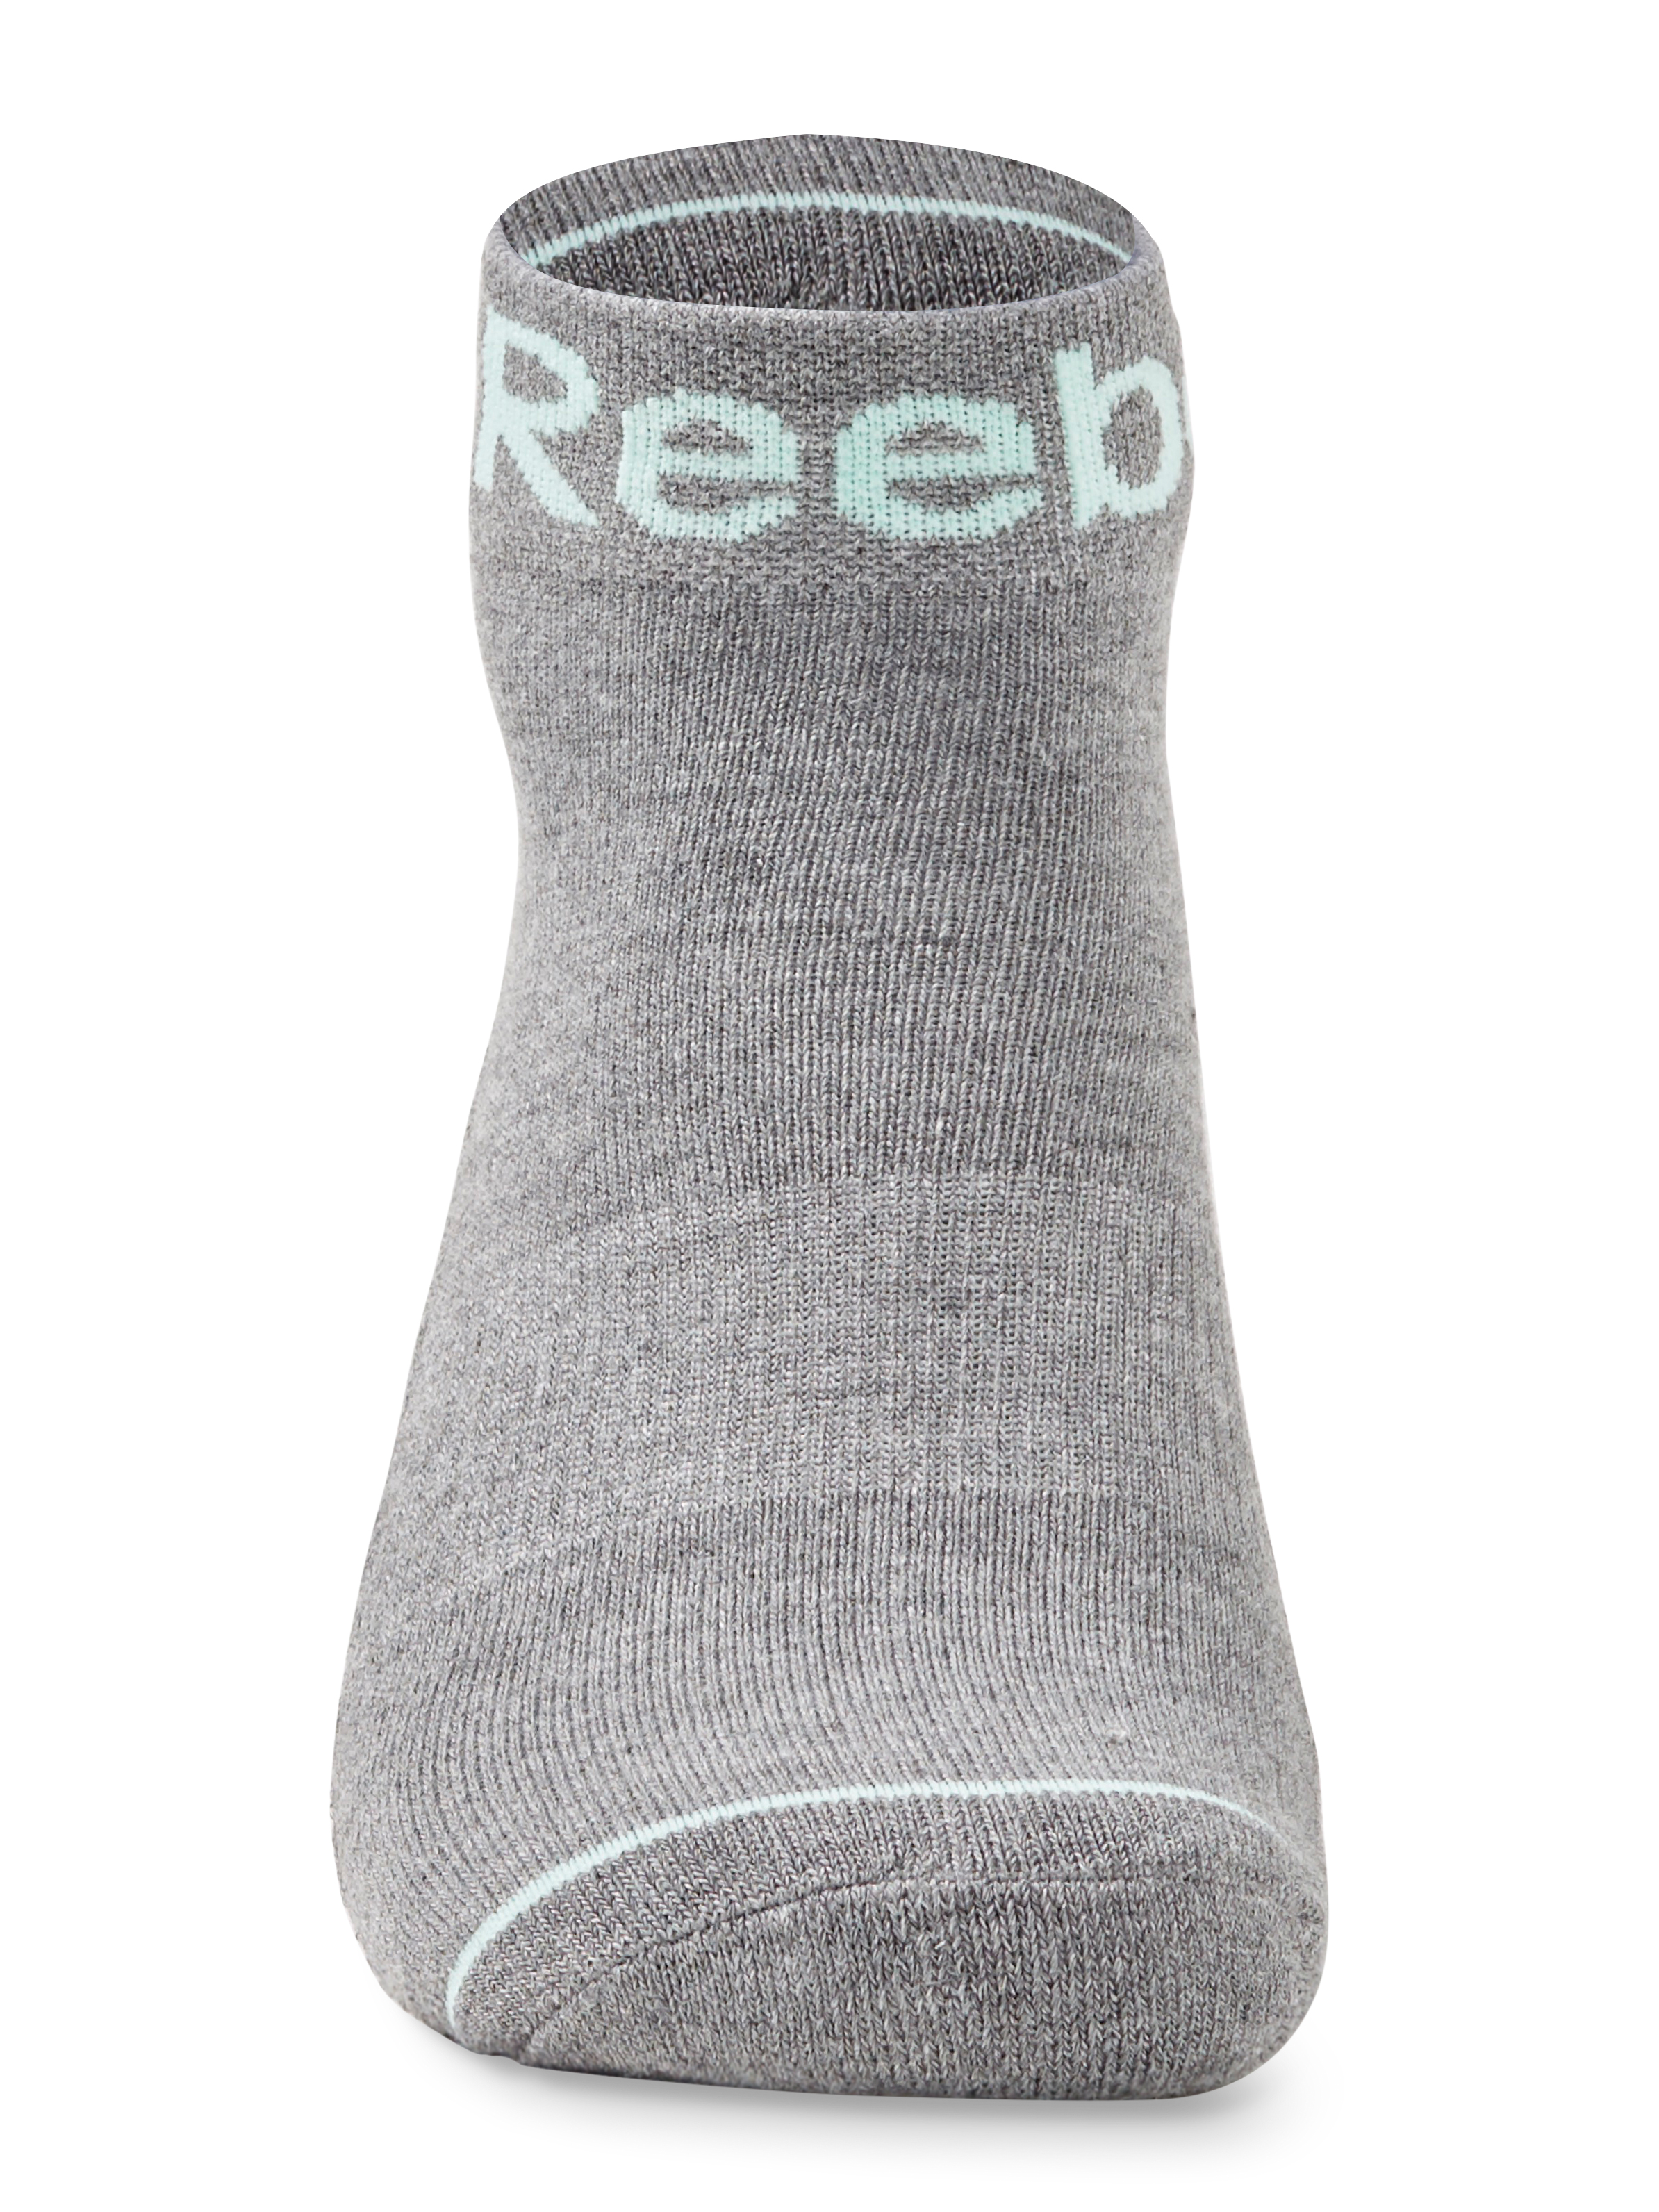 Reebok Women's Cushion Quarter Socks, 6-Pack - image 4 of 9